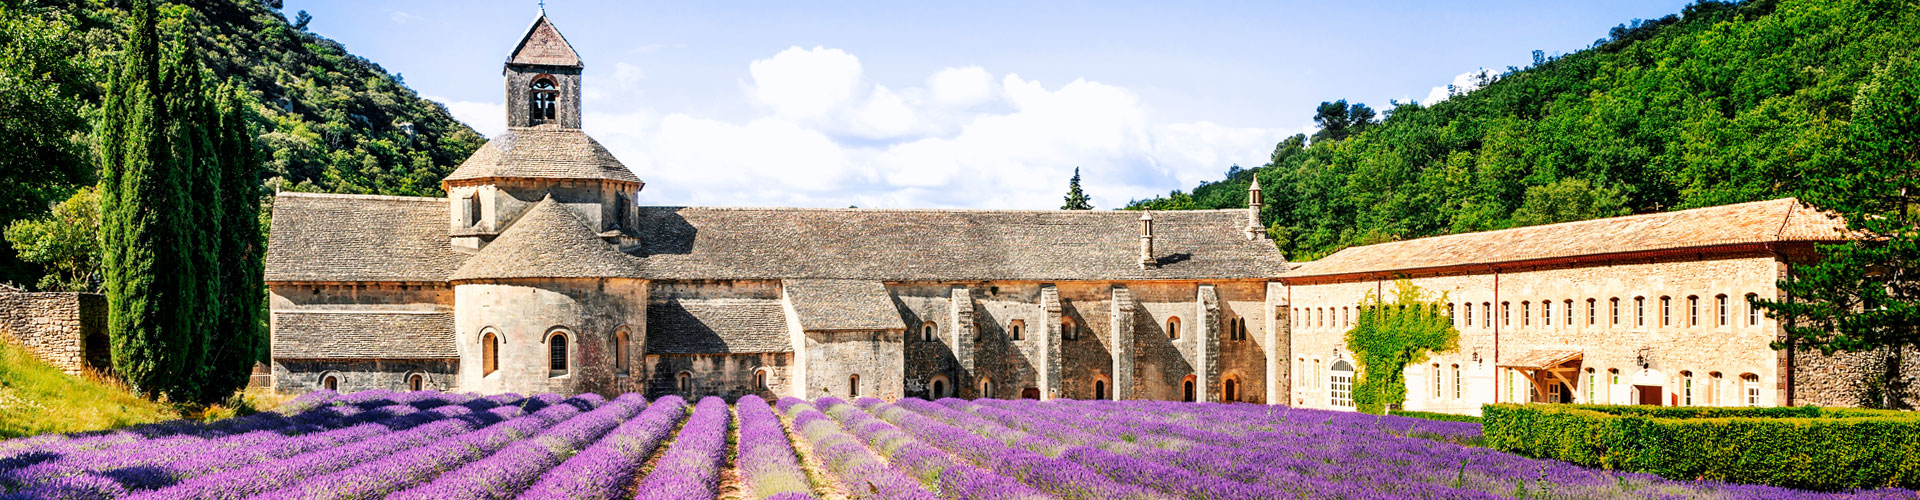 lavender field in france